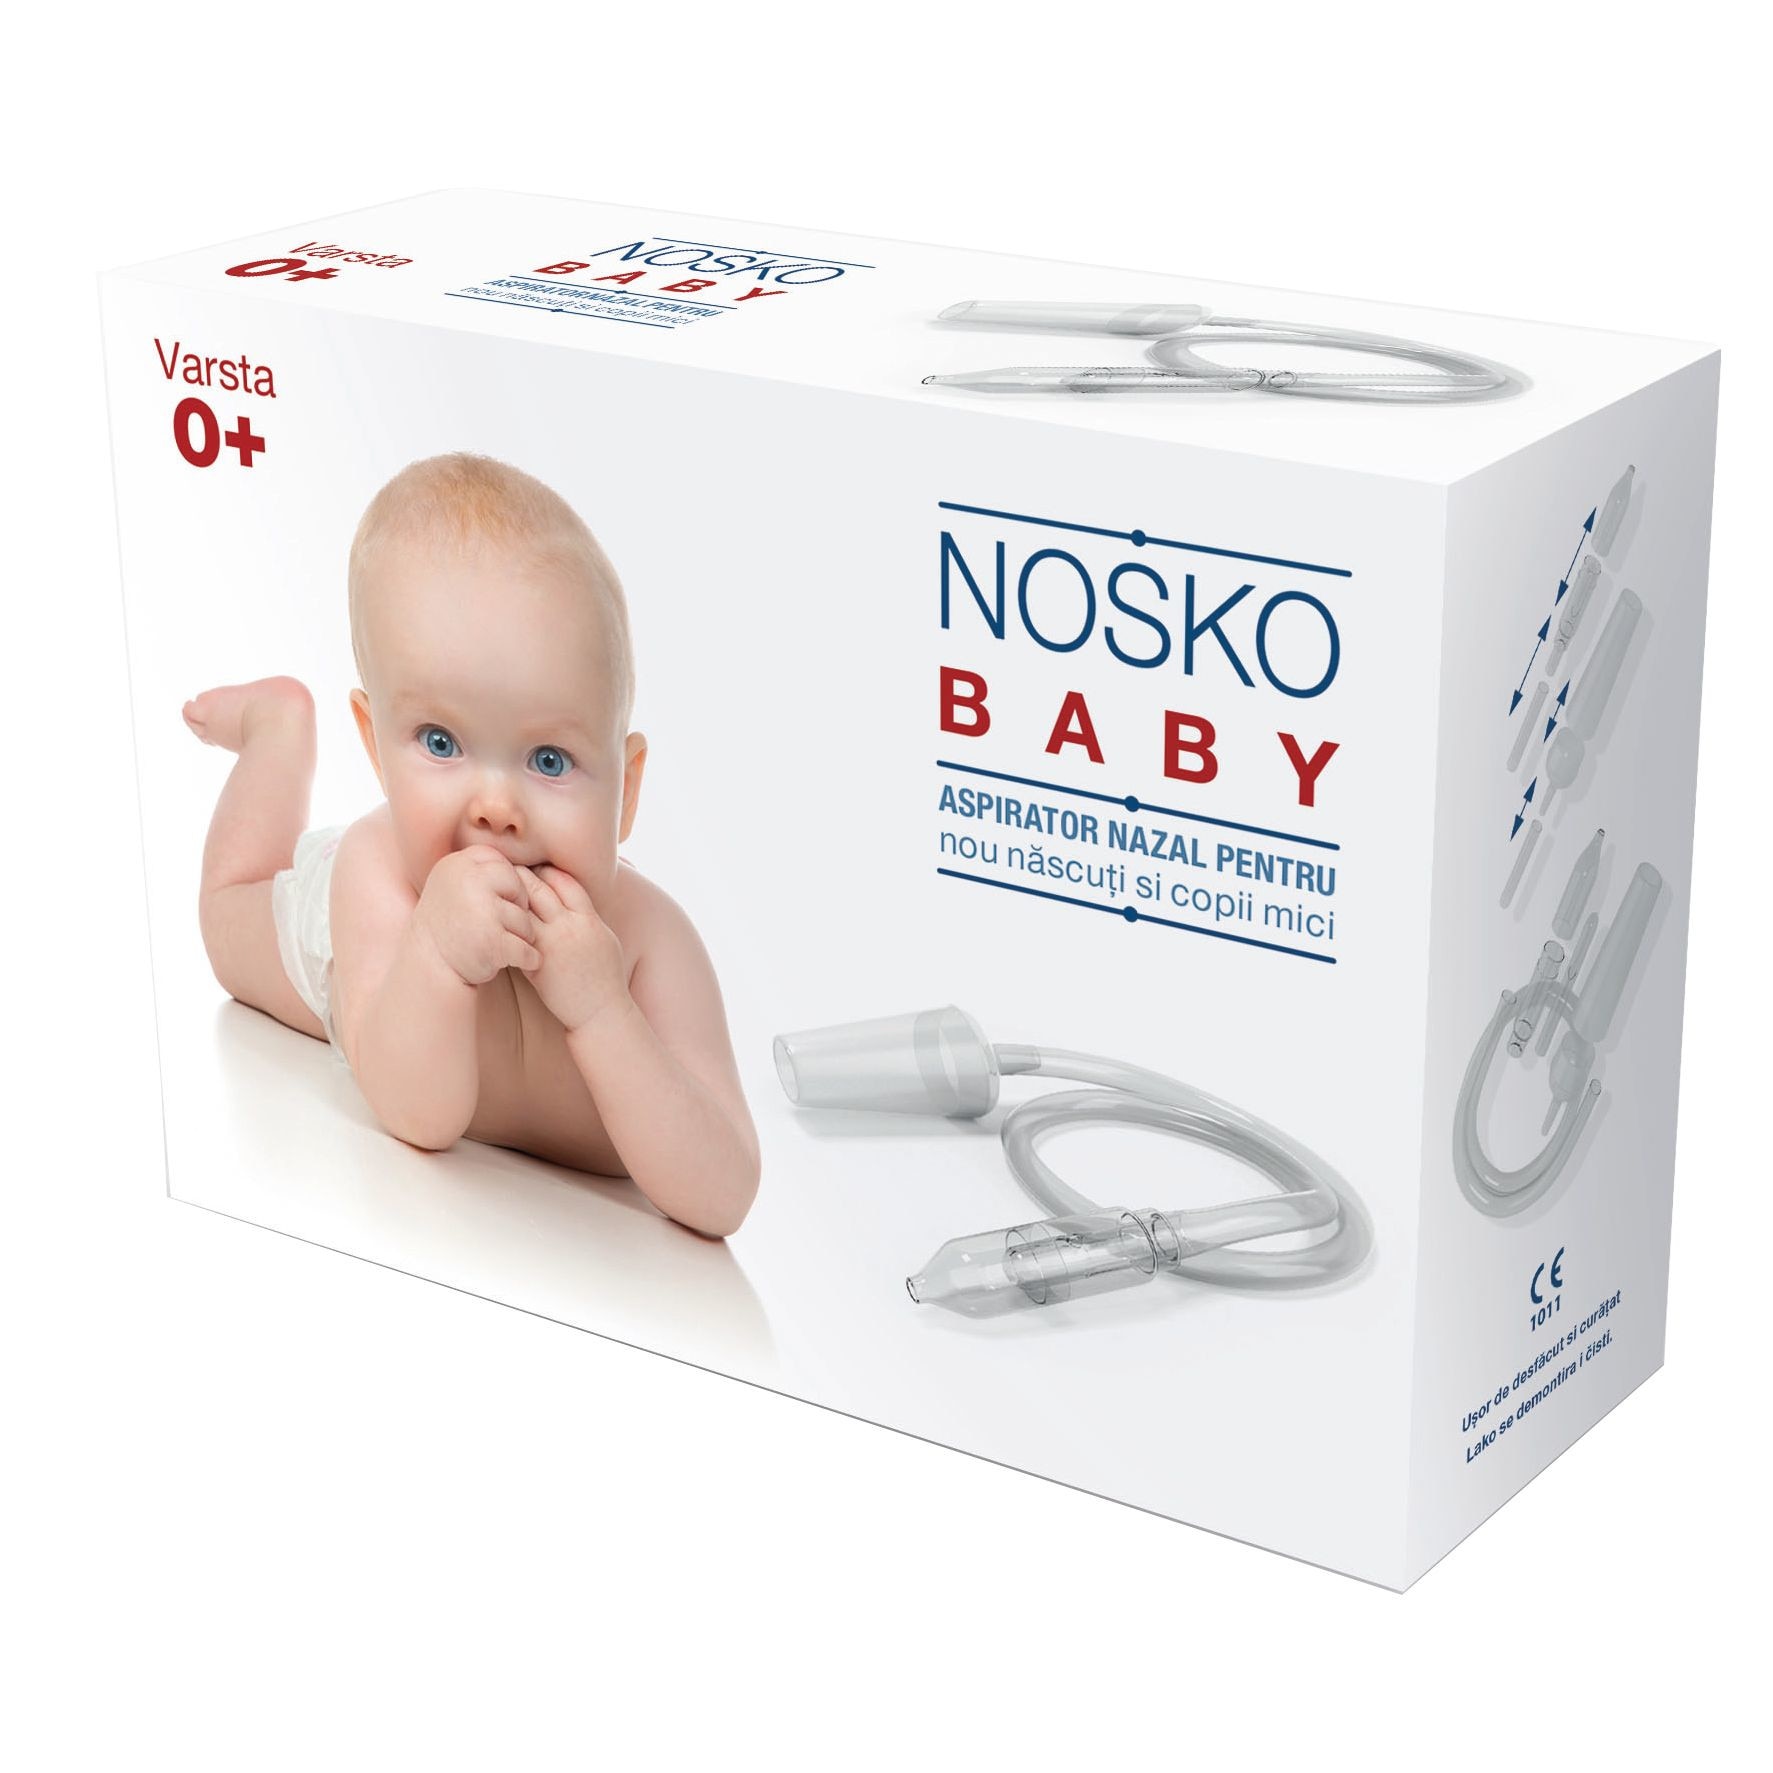 Elementary school to invent superstition Aspirator nazal Nosko pentru nou nascuti si copii, Nosko Baby - eMAG.ro